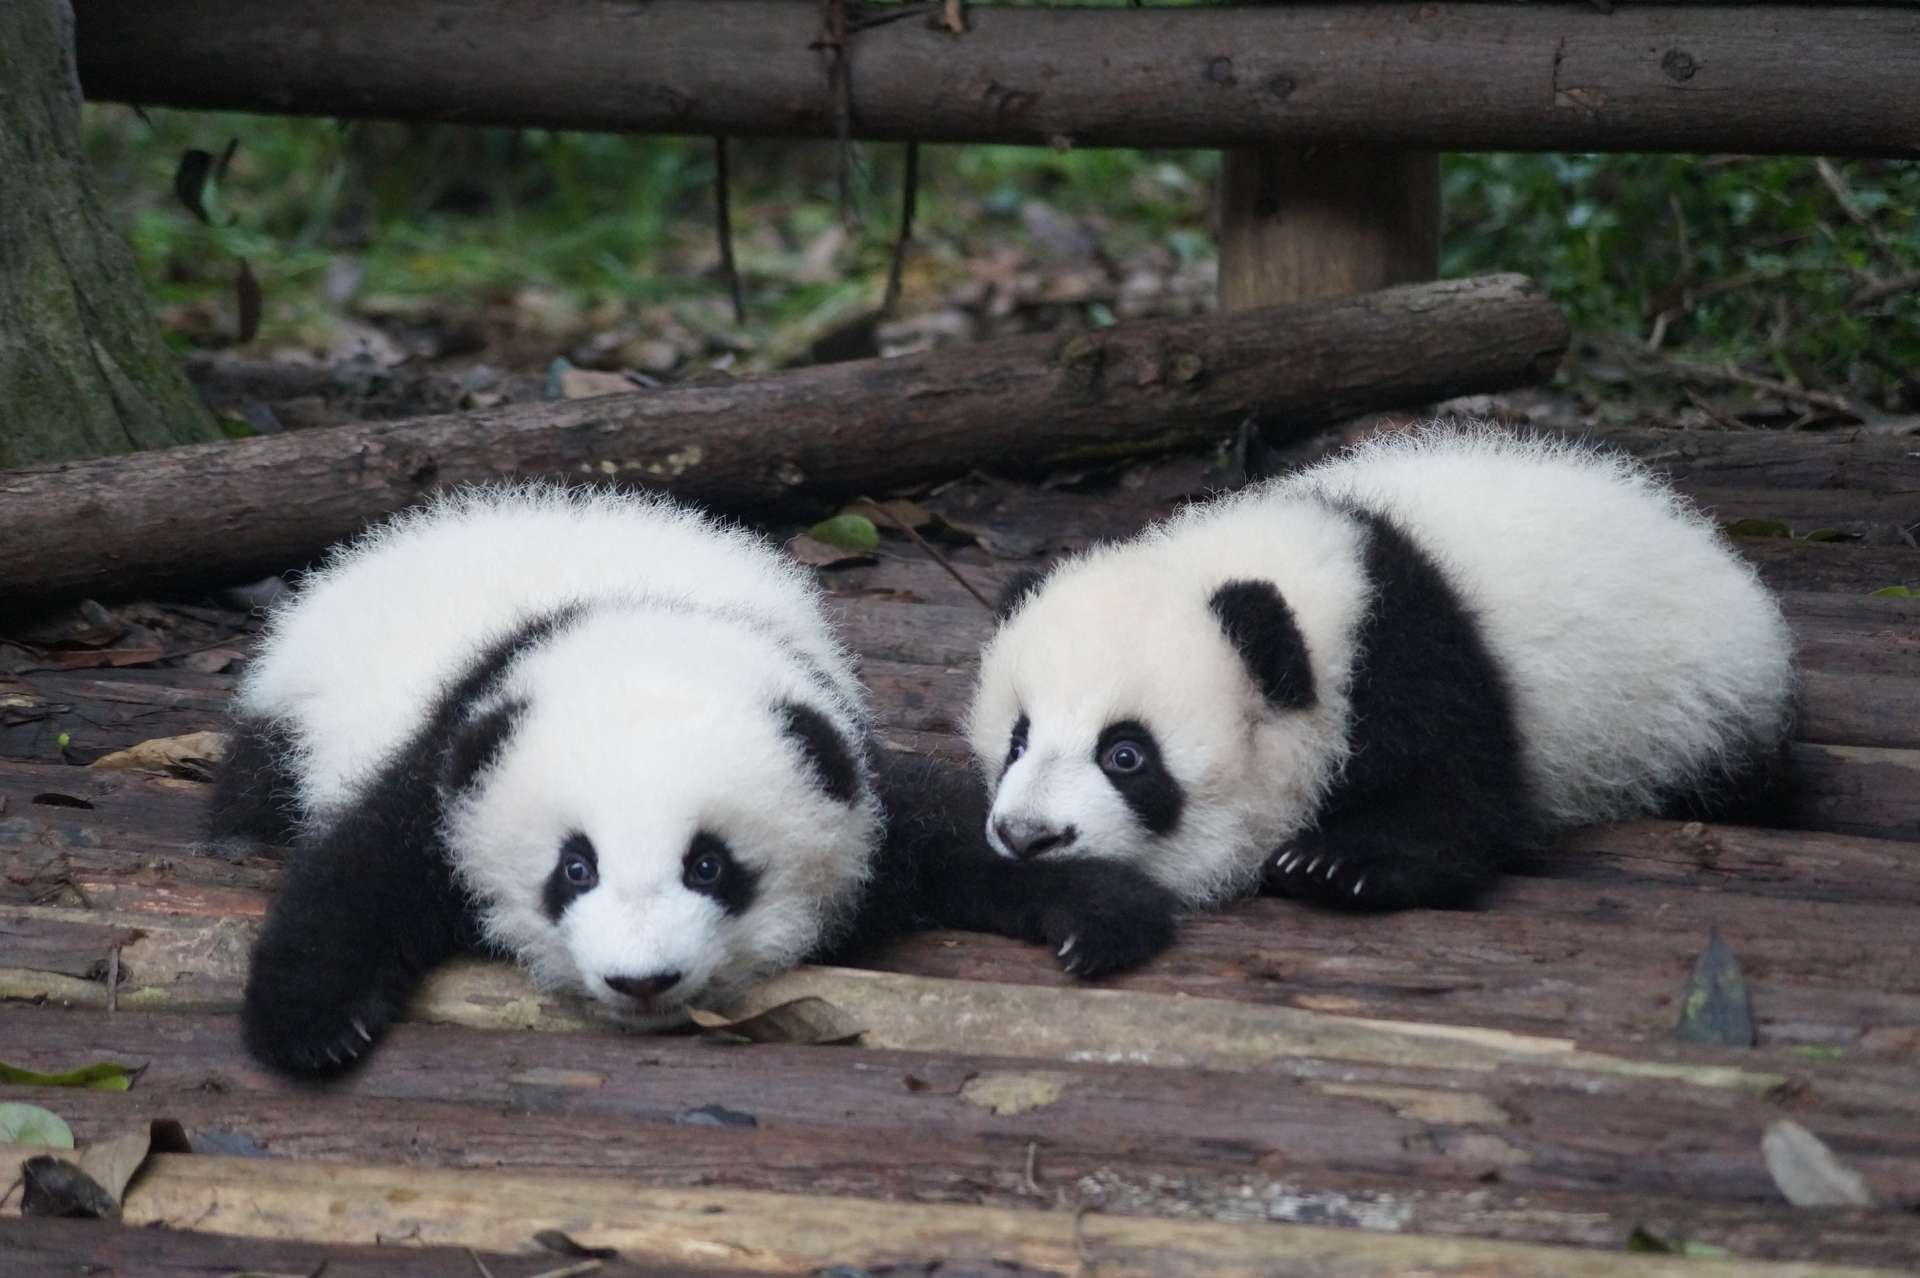 Two baby Pandas